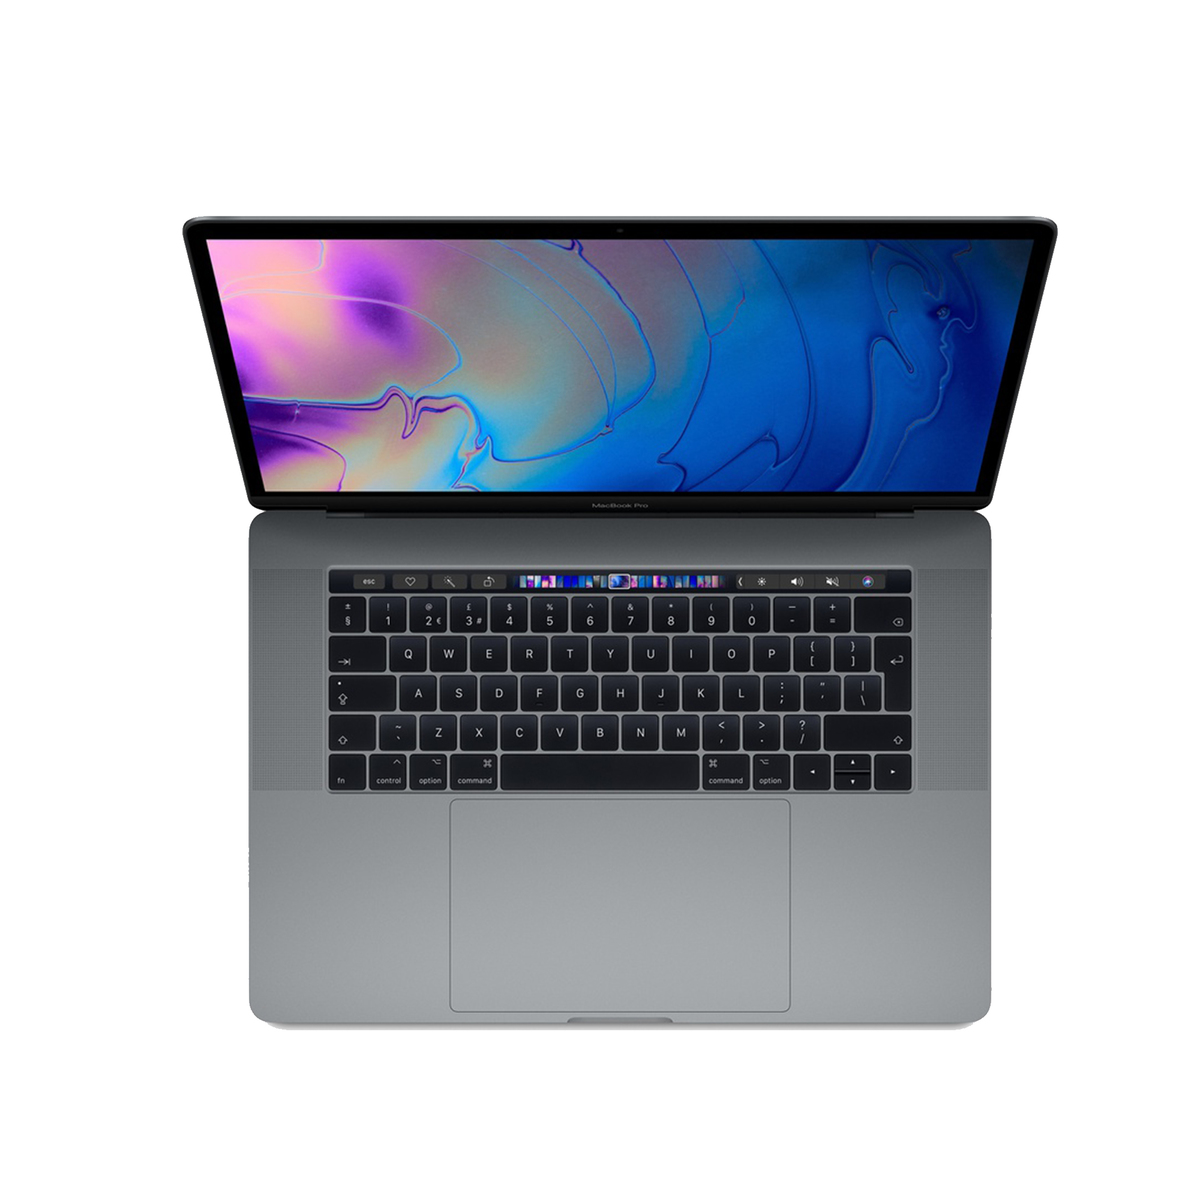 Apple MacBook Pro with Touch Bar 13.3-Inch Retina Display,Core i5/8 GB RAM/512 GB SSD/Space Grey (MV972B/A)